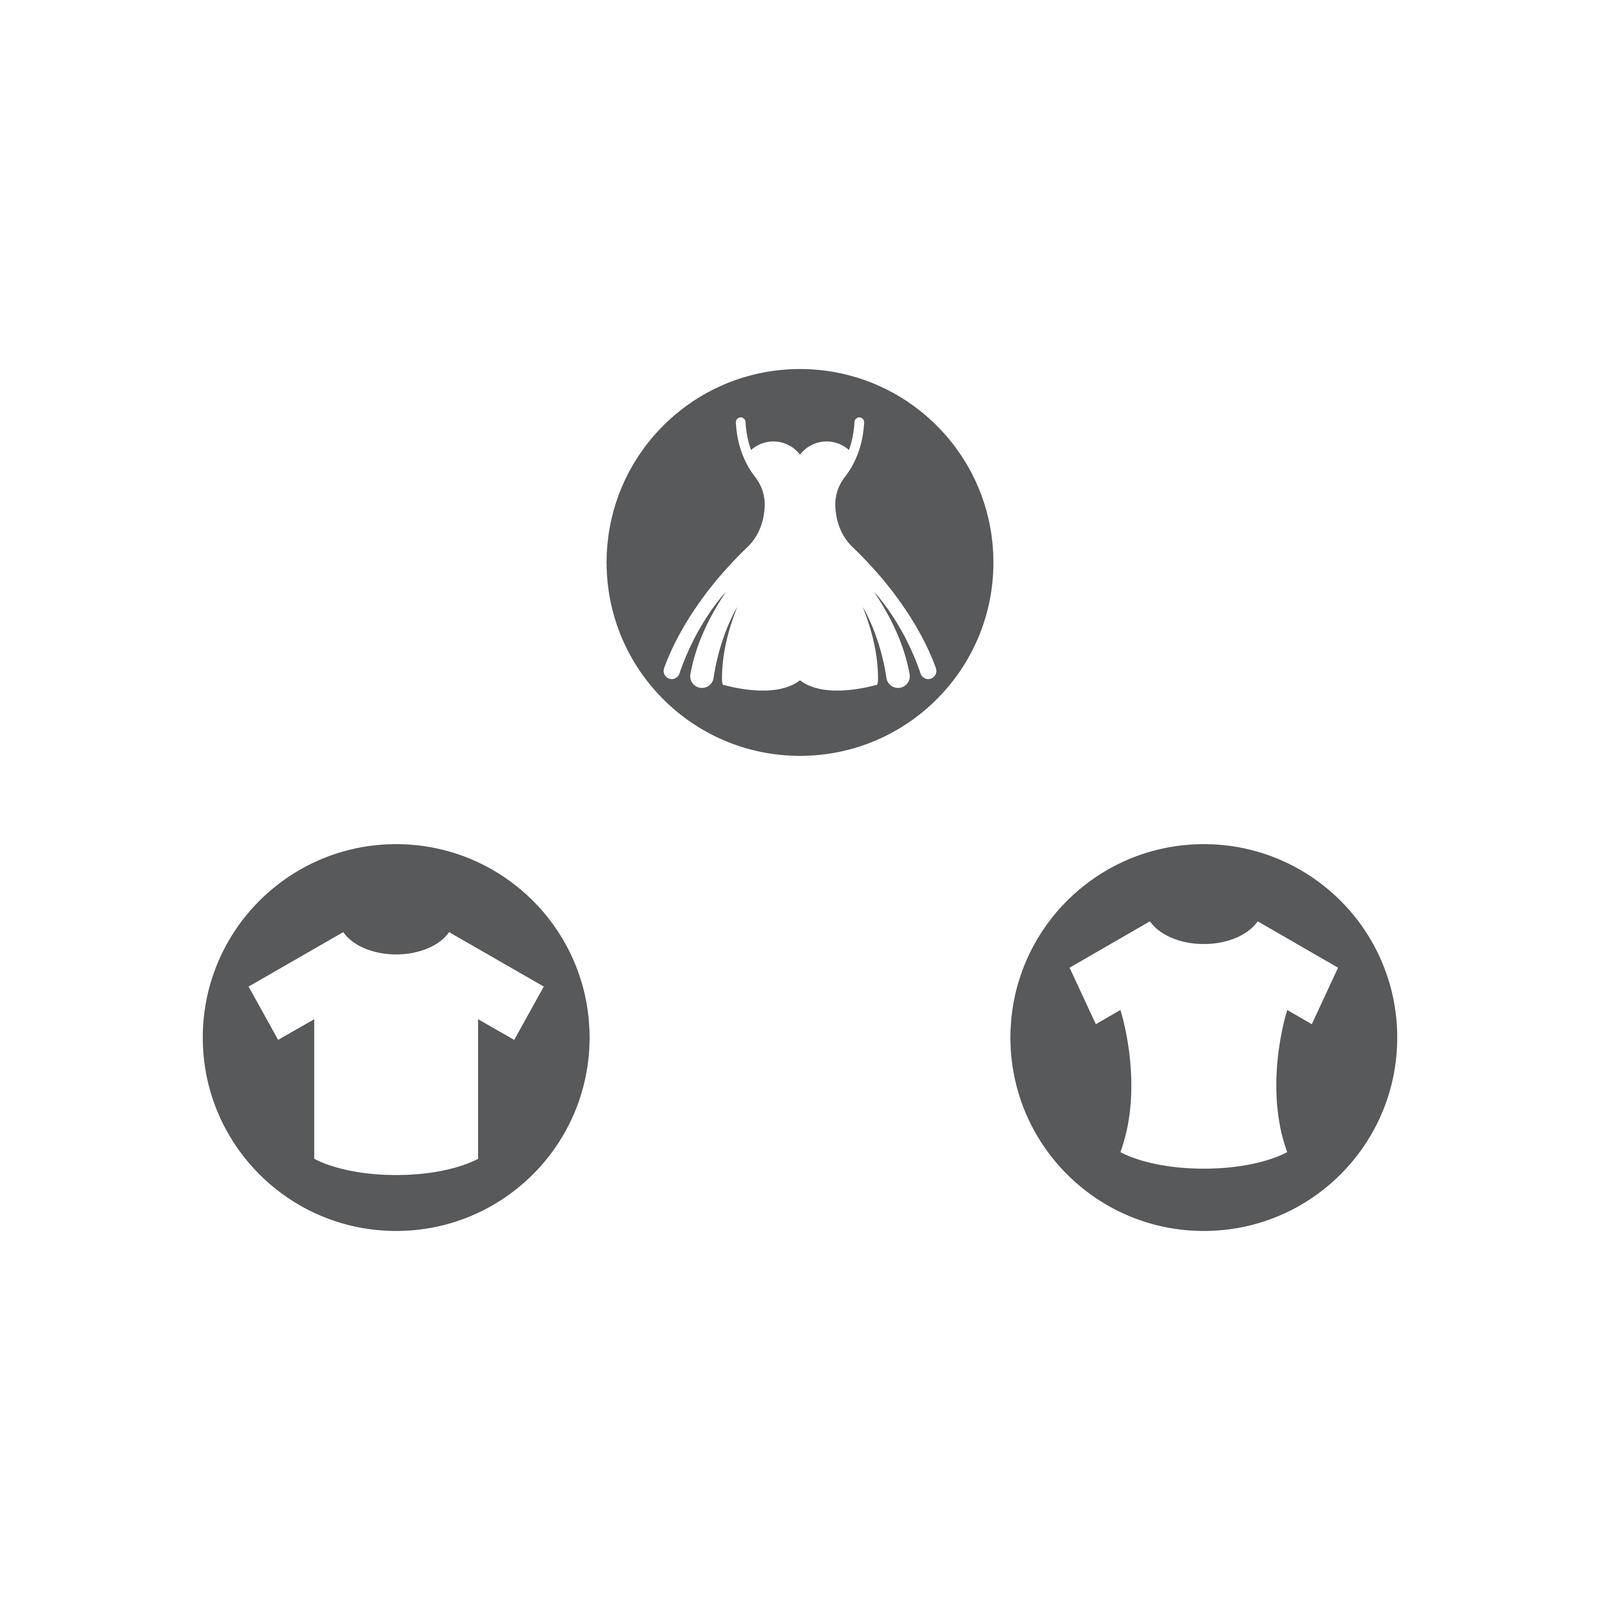 Clothing shop logo template vector icon illustration